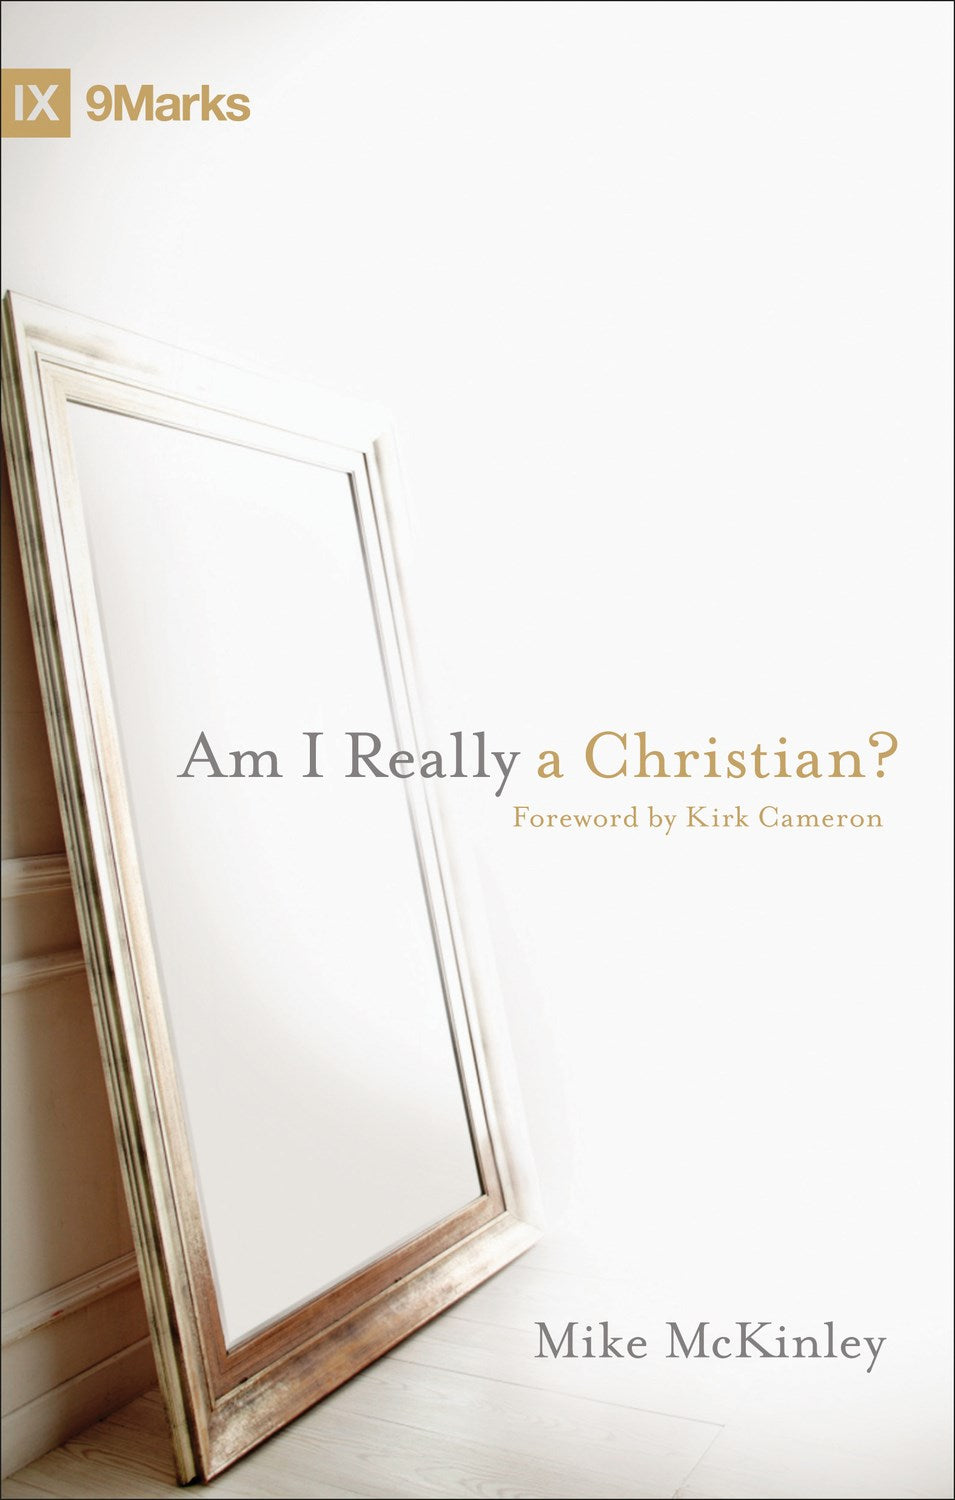 Am I Really A Christian? (9Marks)